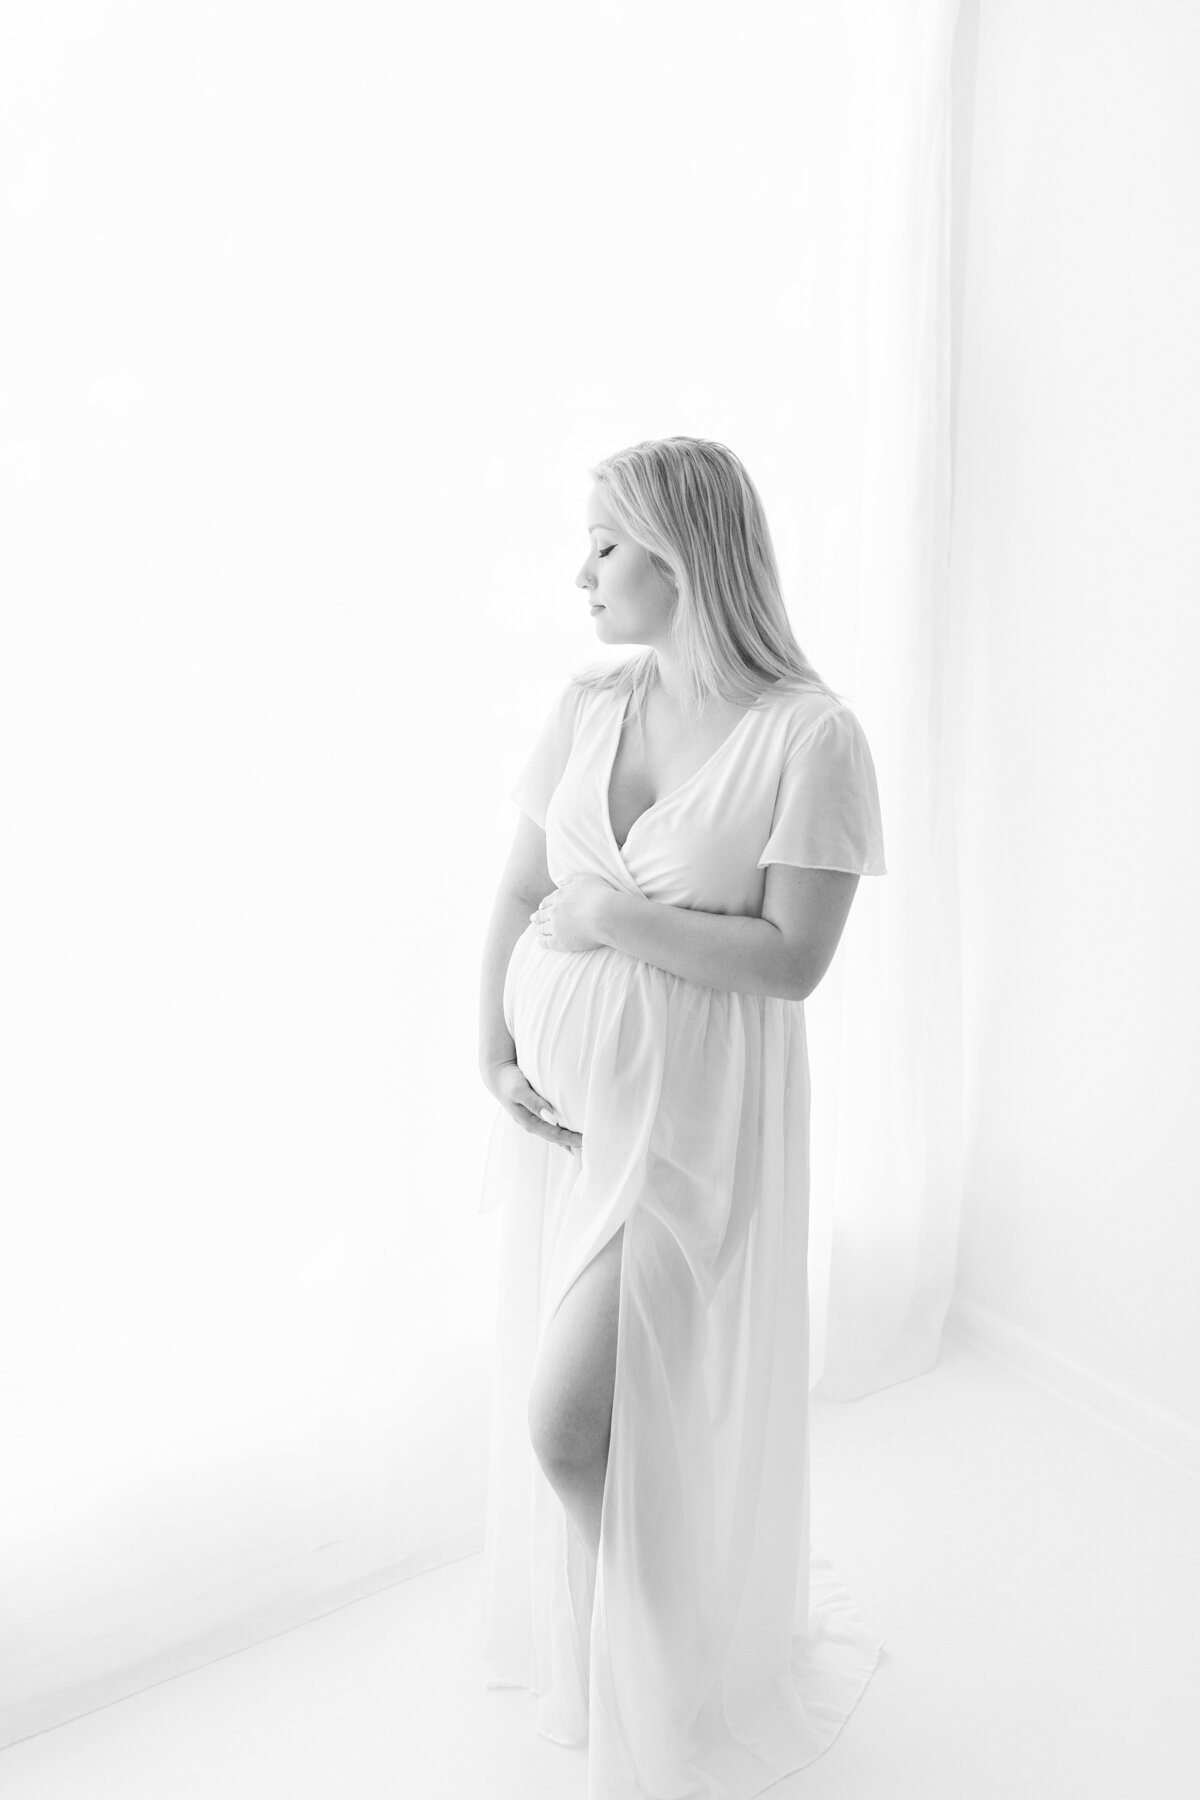 jacksonville-maternity-photographer-114